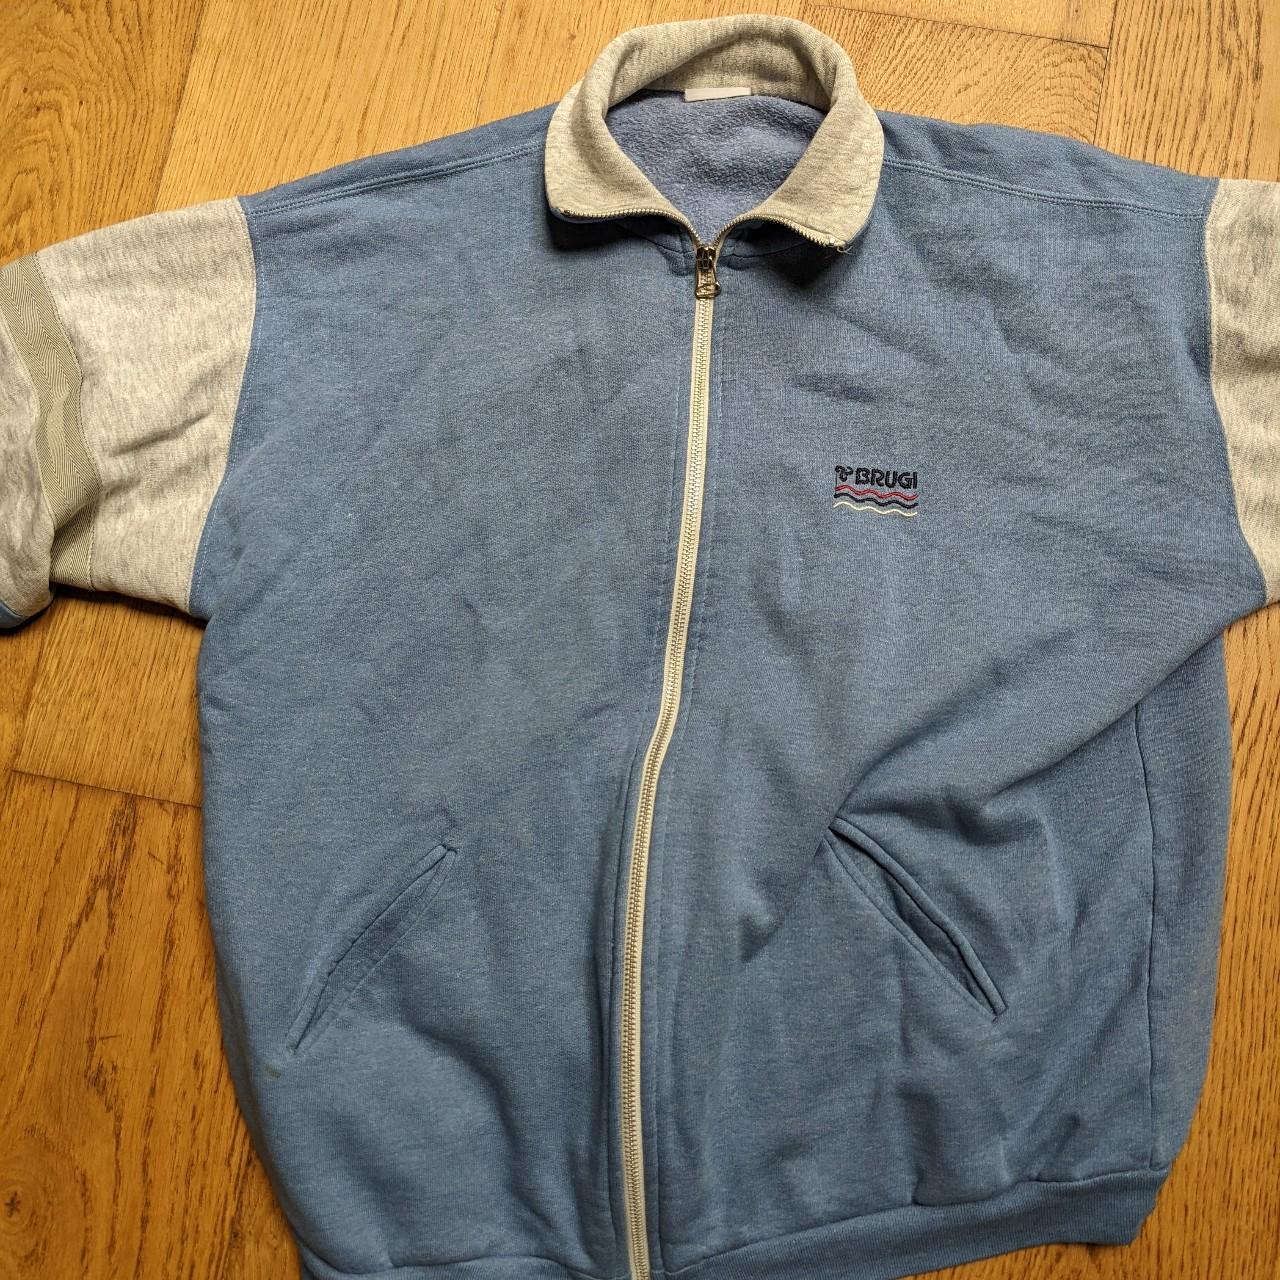 Vintage zip up sweatshirt Fits oversized small or... - Depop